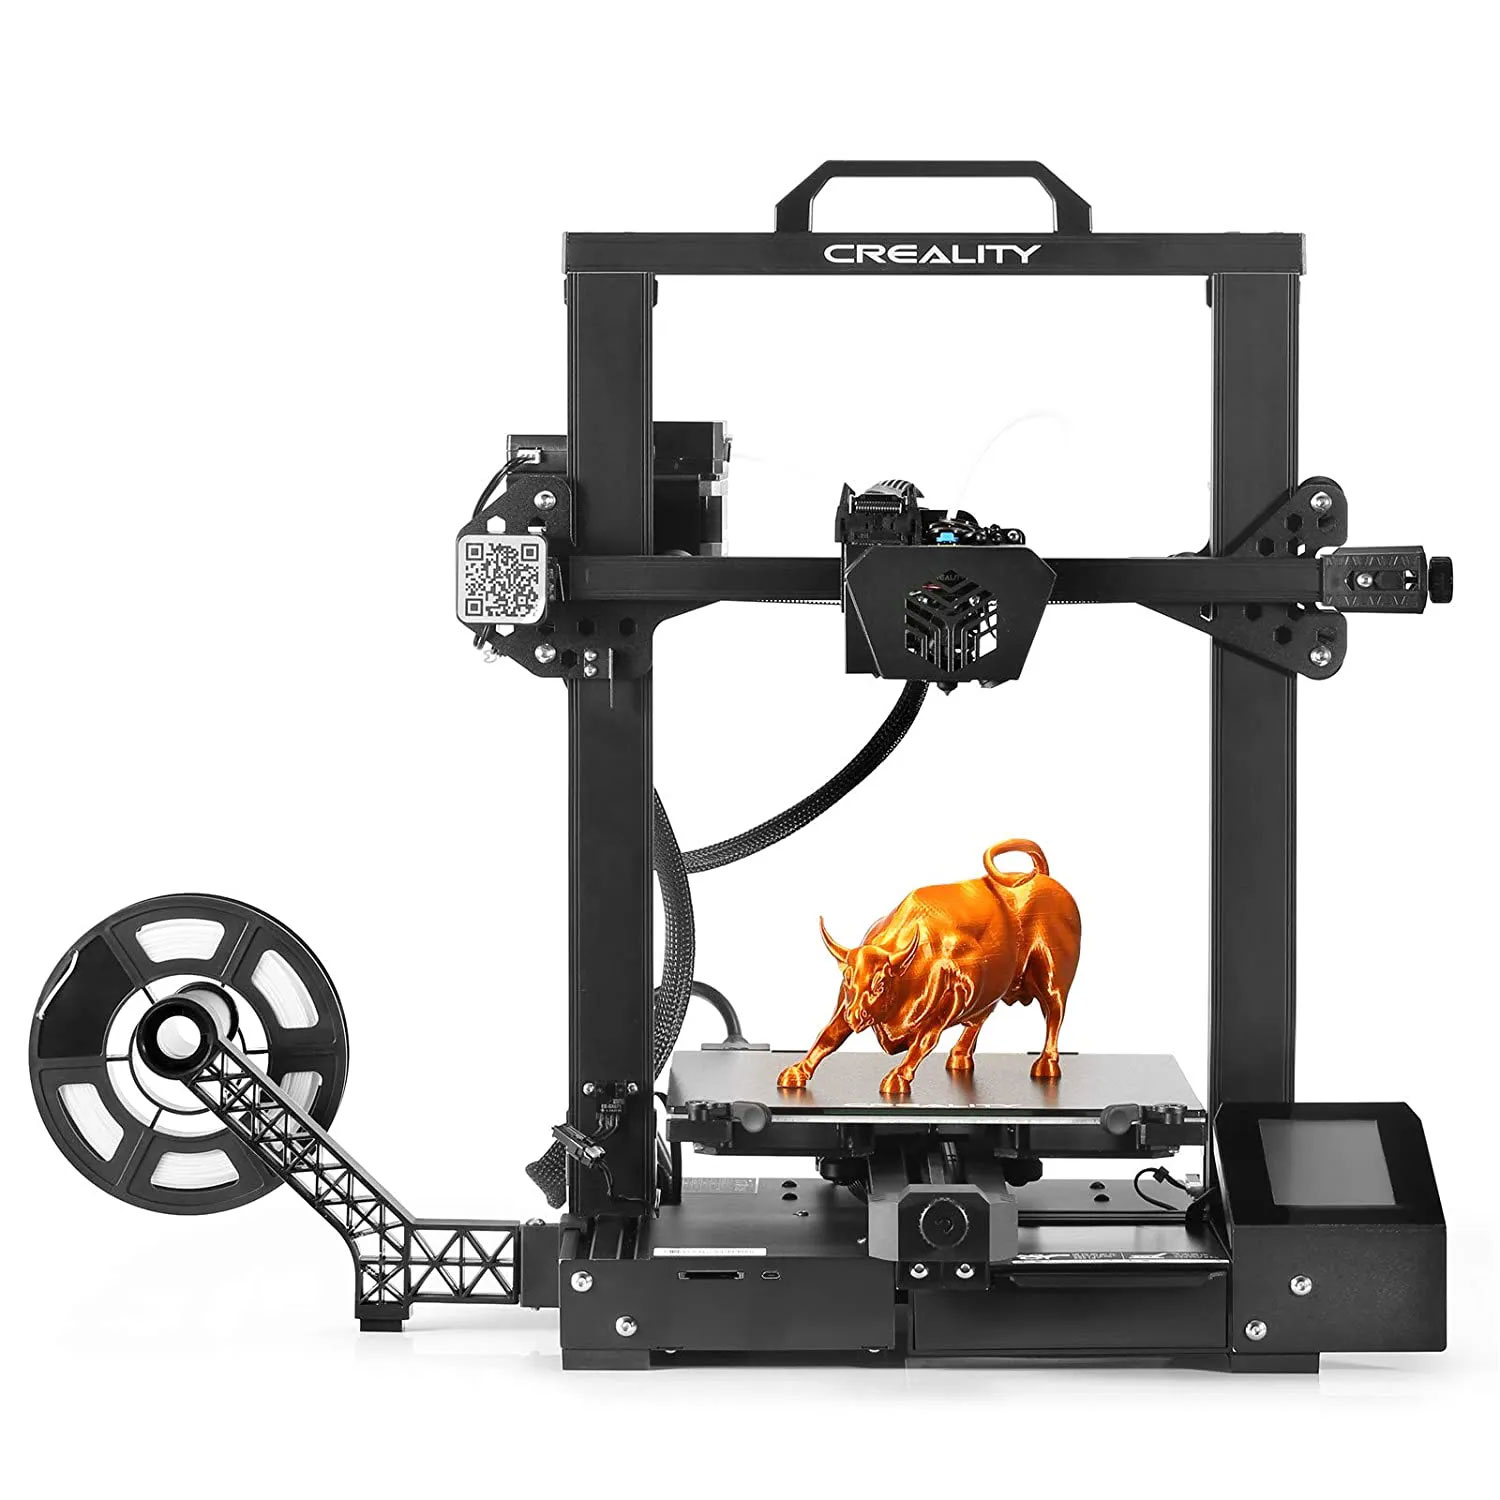 Impressora 3D Creality CR-6 SE (235 x 235 x 250MM)